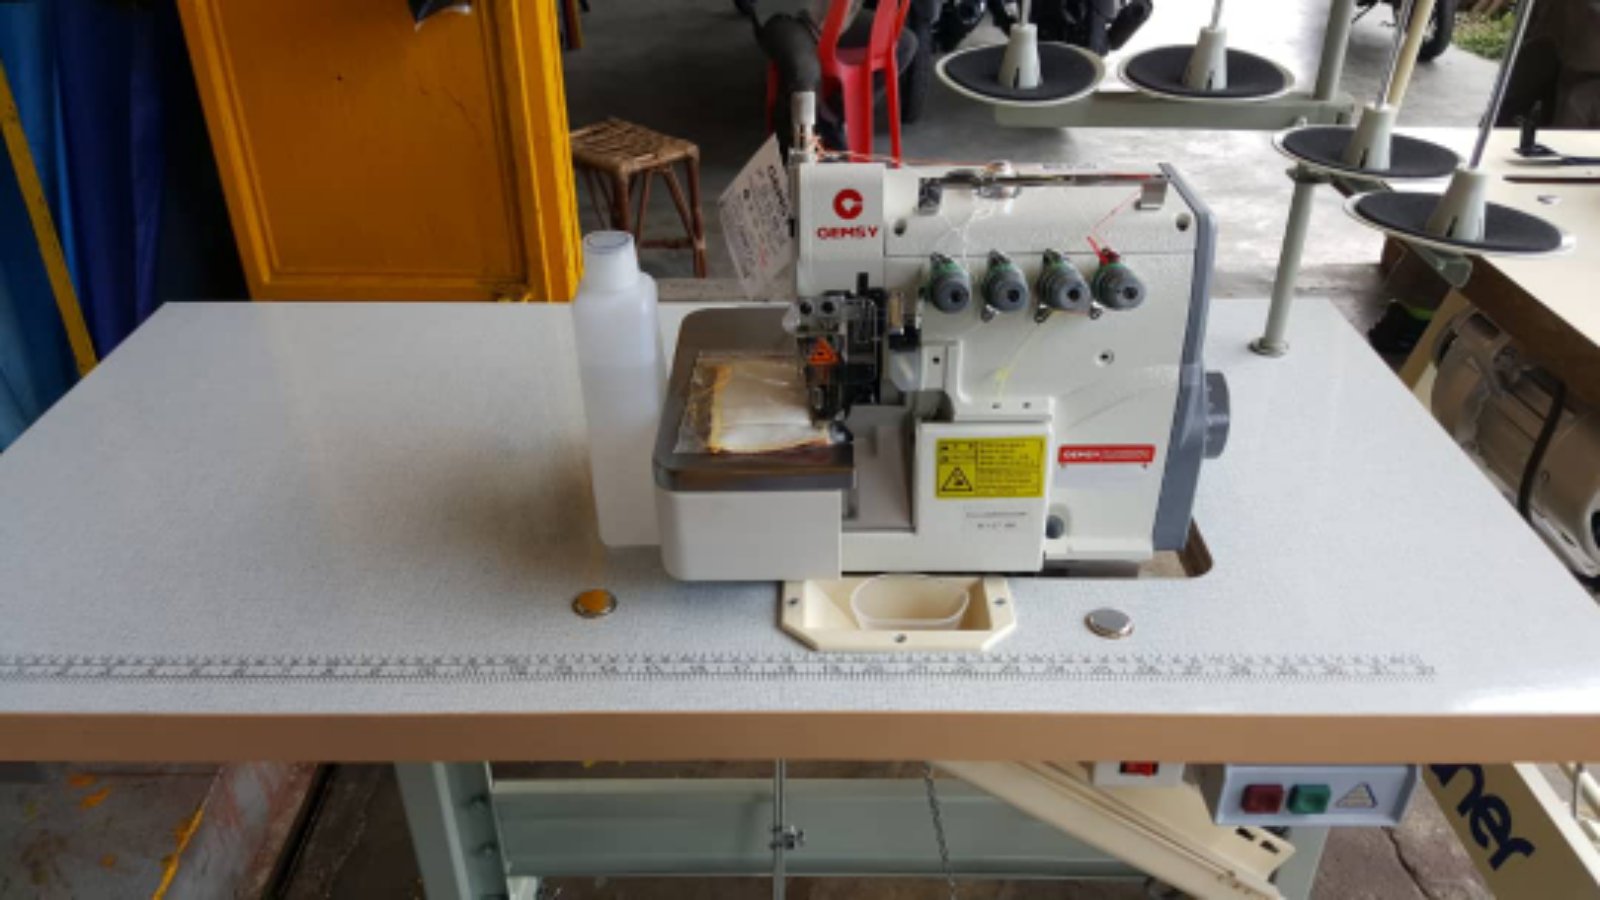 Gemsy Overlock Sewing Machine